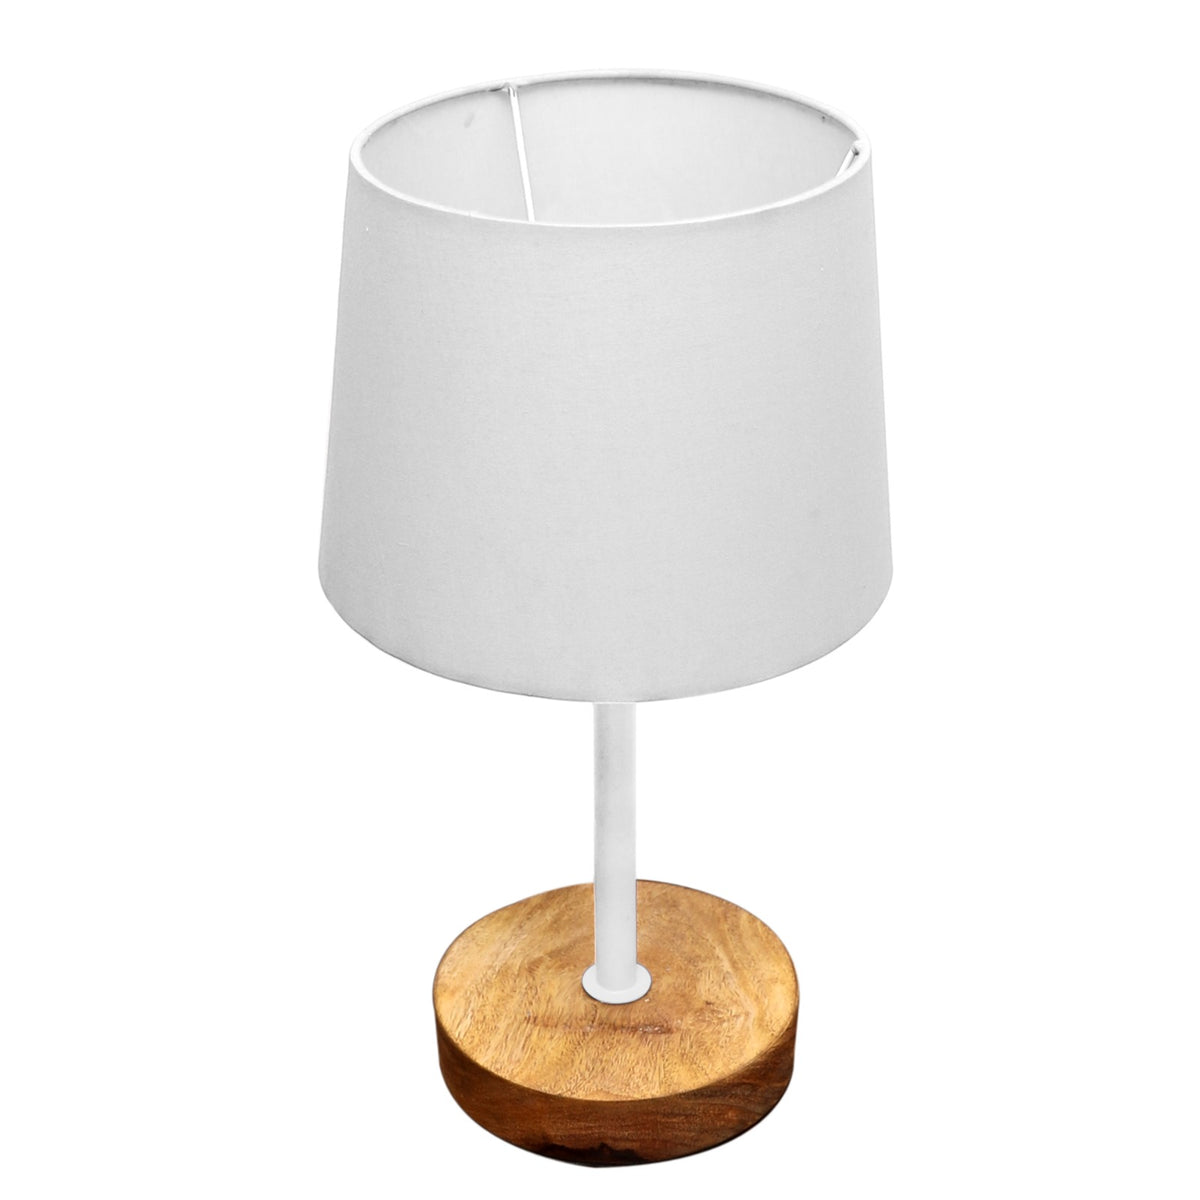 Table Lamp White